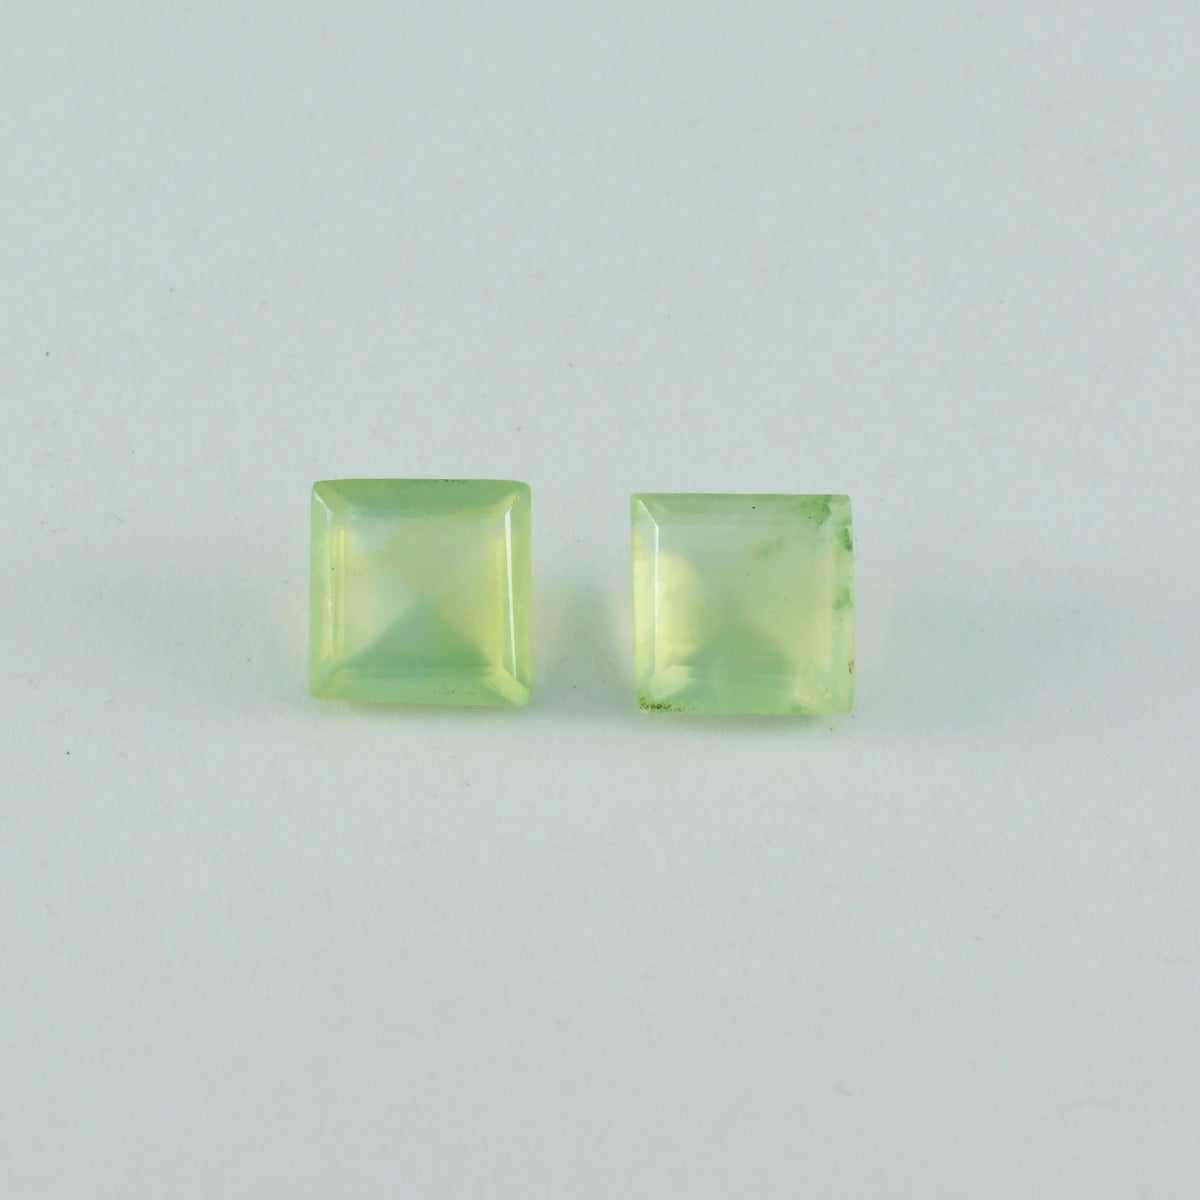 riyogems 1pc グリーン プレナイト ファセット 8x8 mm 正方形の形の見栄えの良い品質のルース宝石